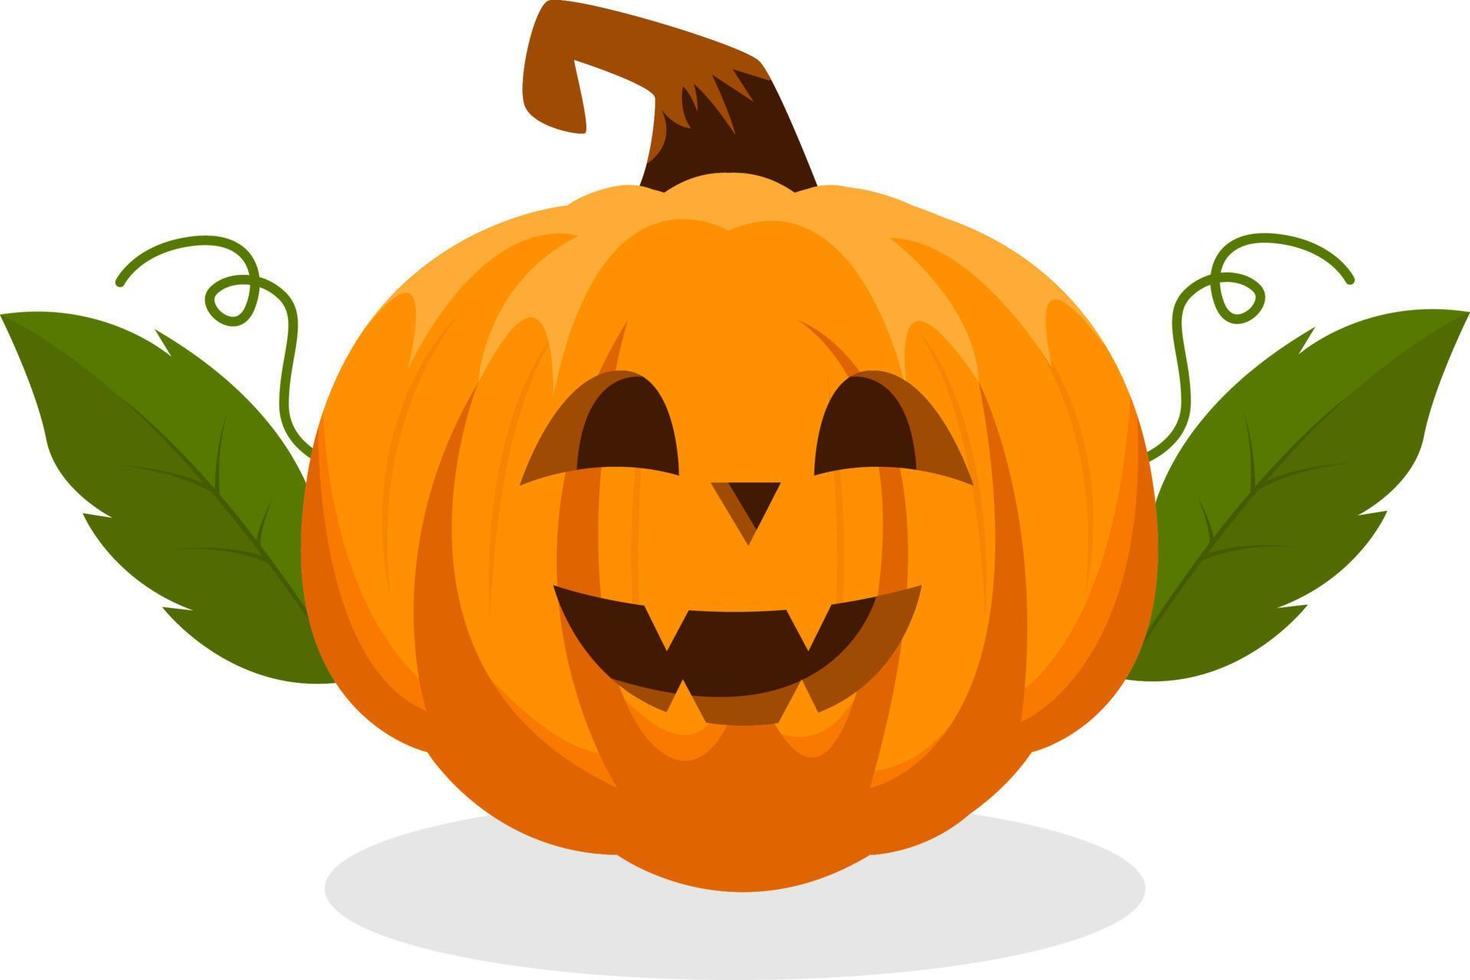 Pumpkin Leaves Character Design Illustration vector